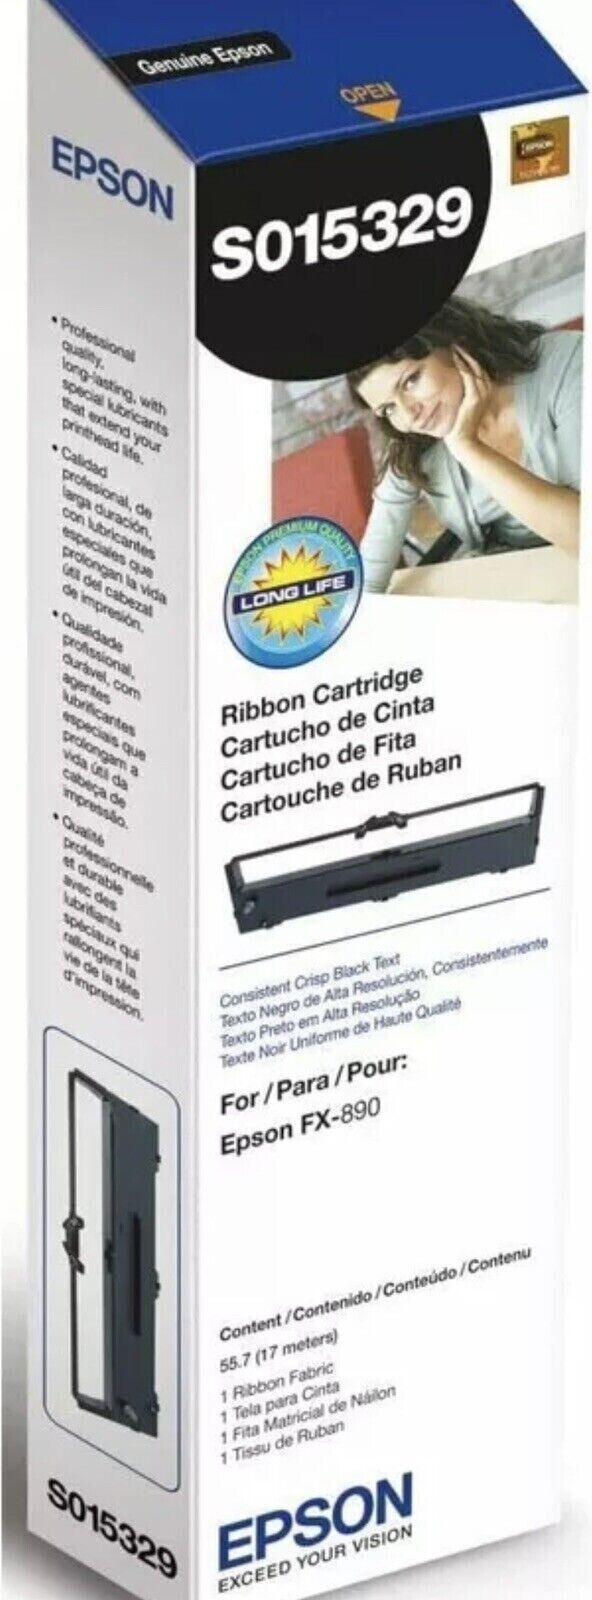 NEW Genuine Epson S015329 FX-890 Fabric Ribbon Cartridge (Black) factory sealed